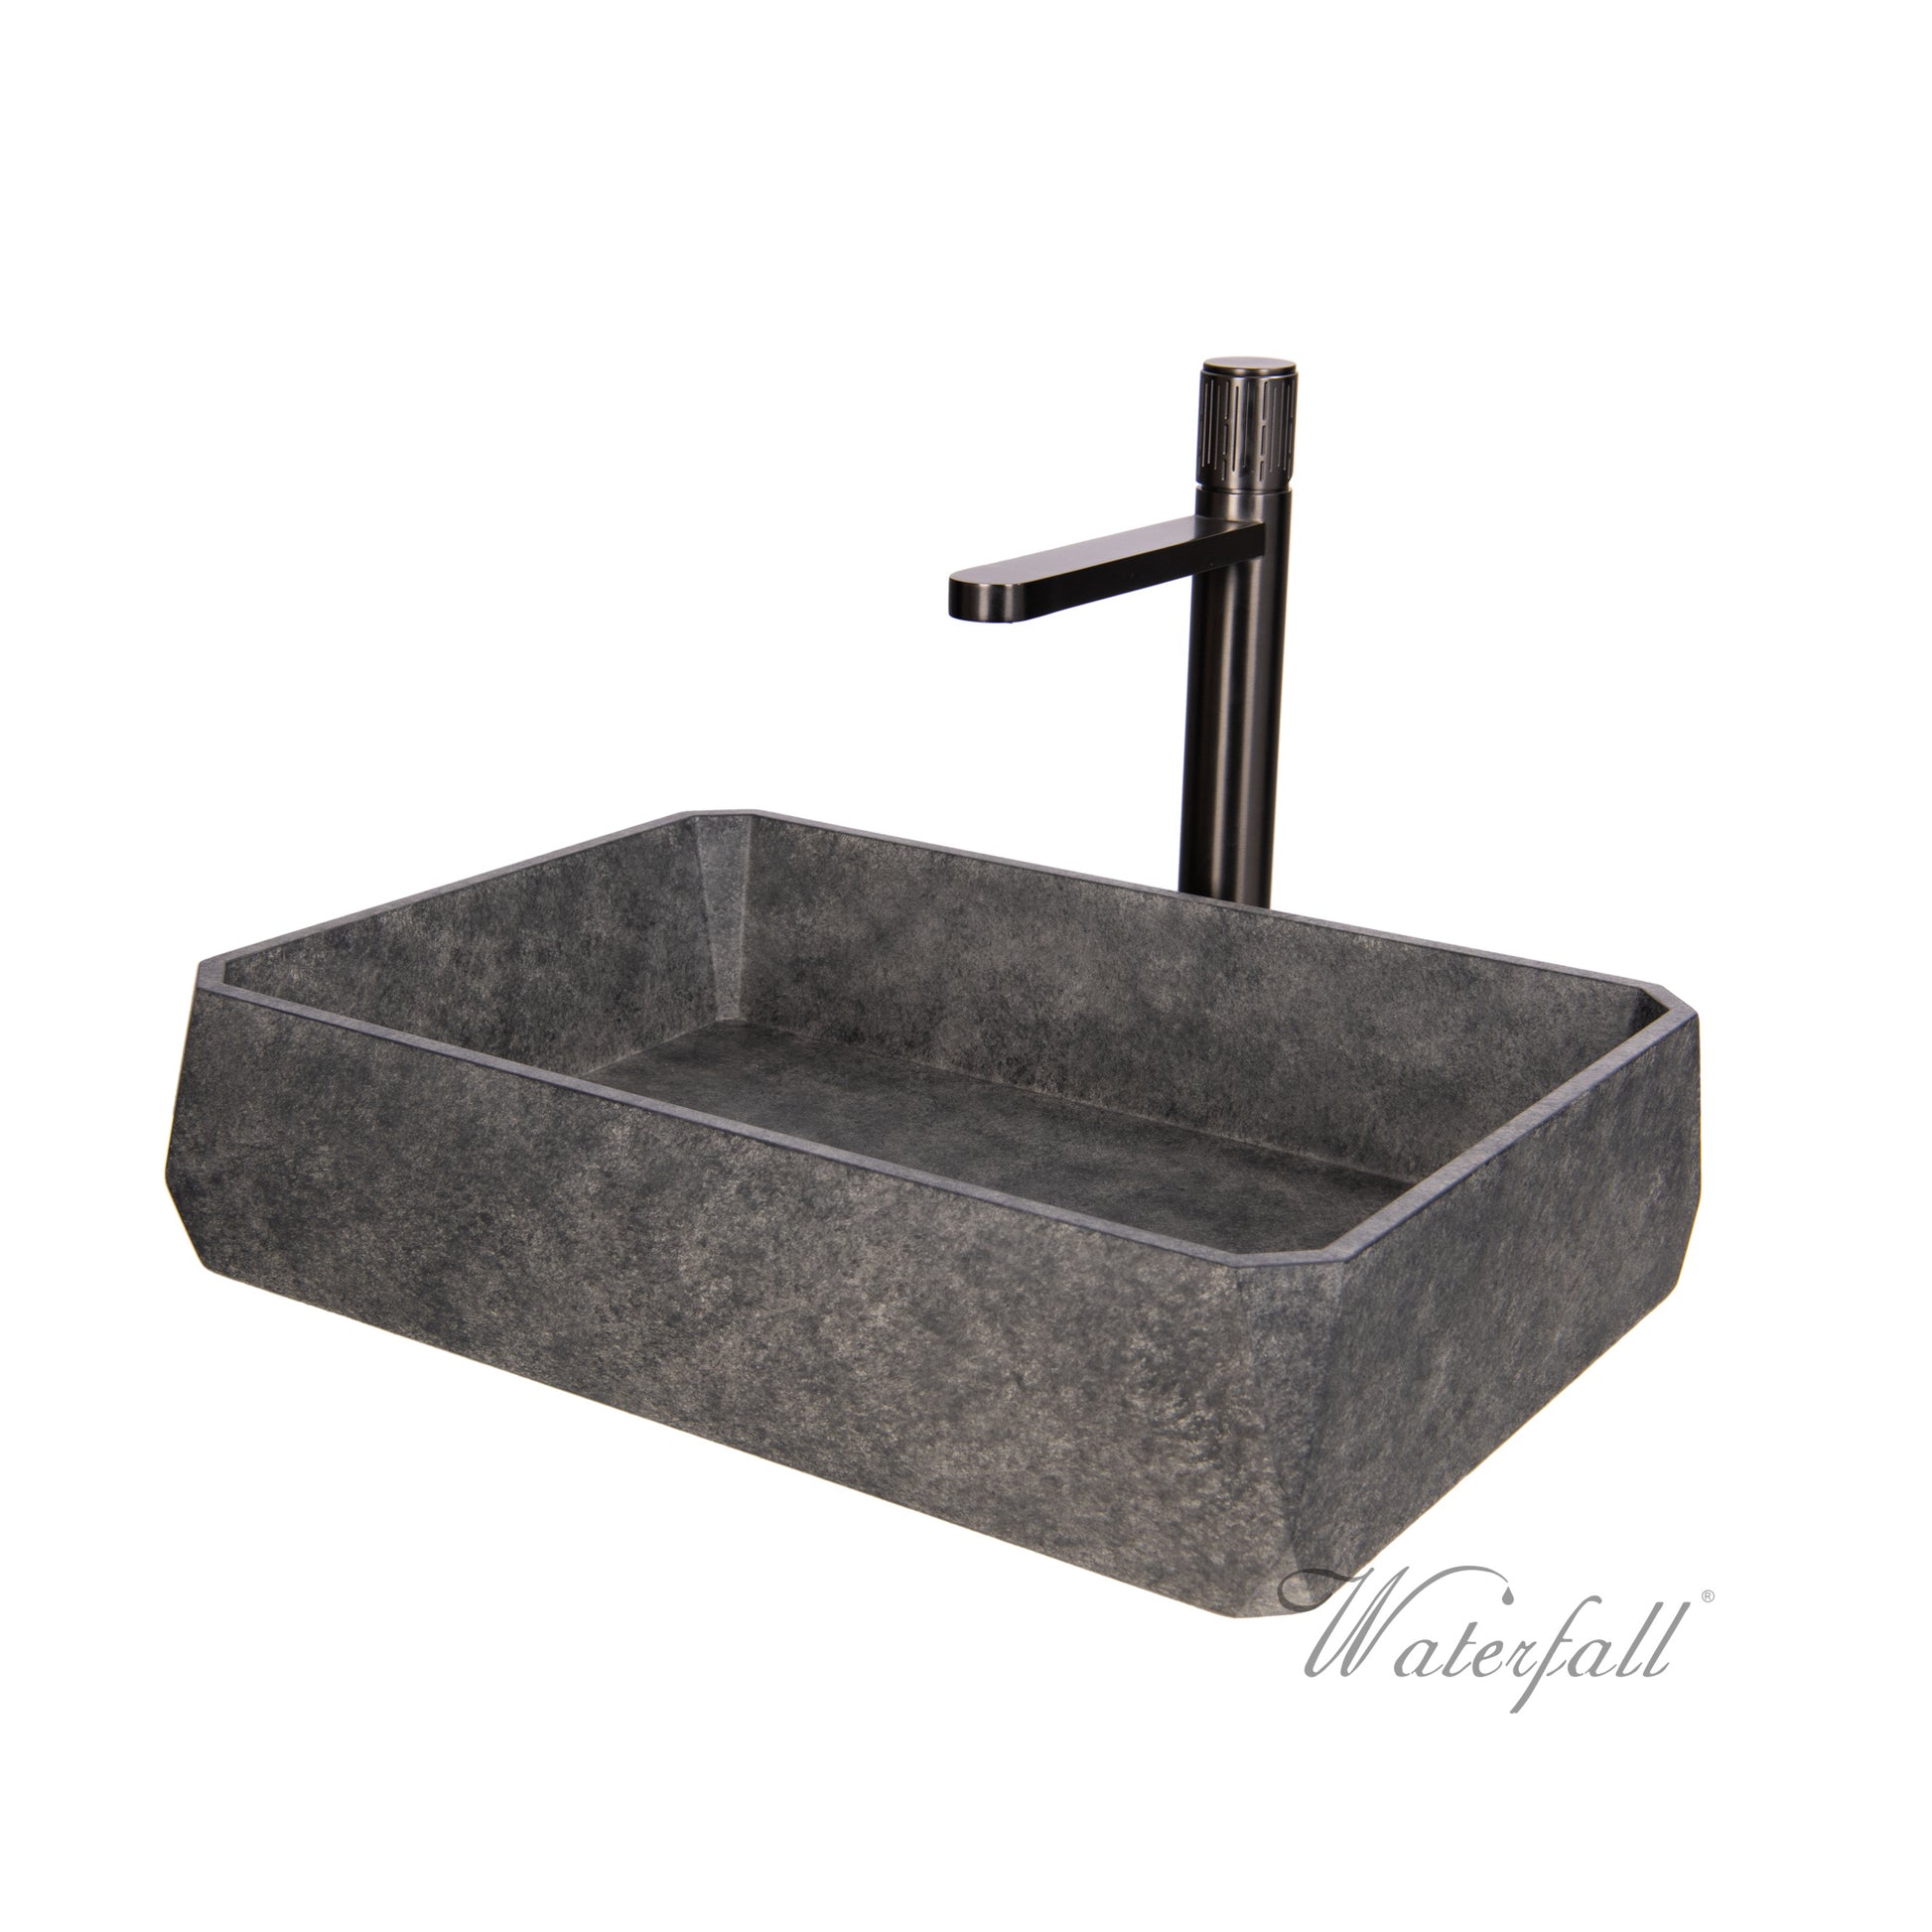 Grey Concrete BathroomSink with Gun Metal Faucet - |VESIMI Design| Luxury and Rustic bathrooms online